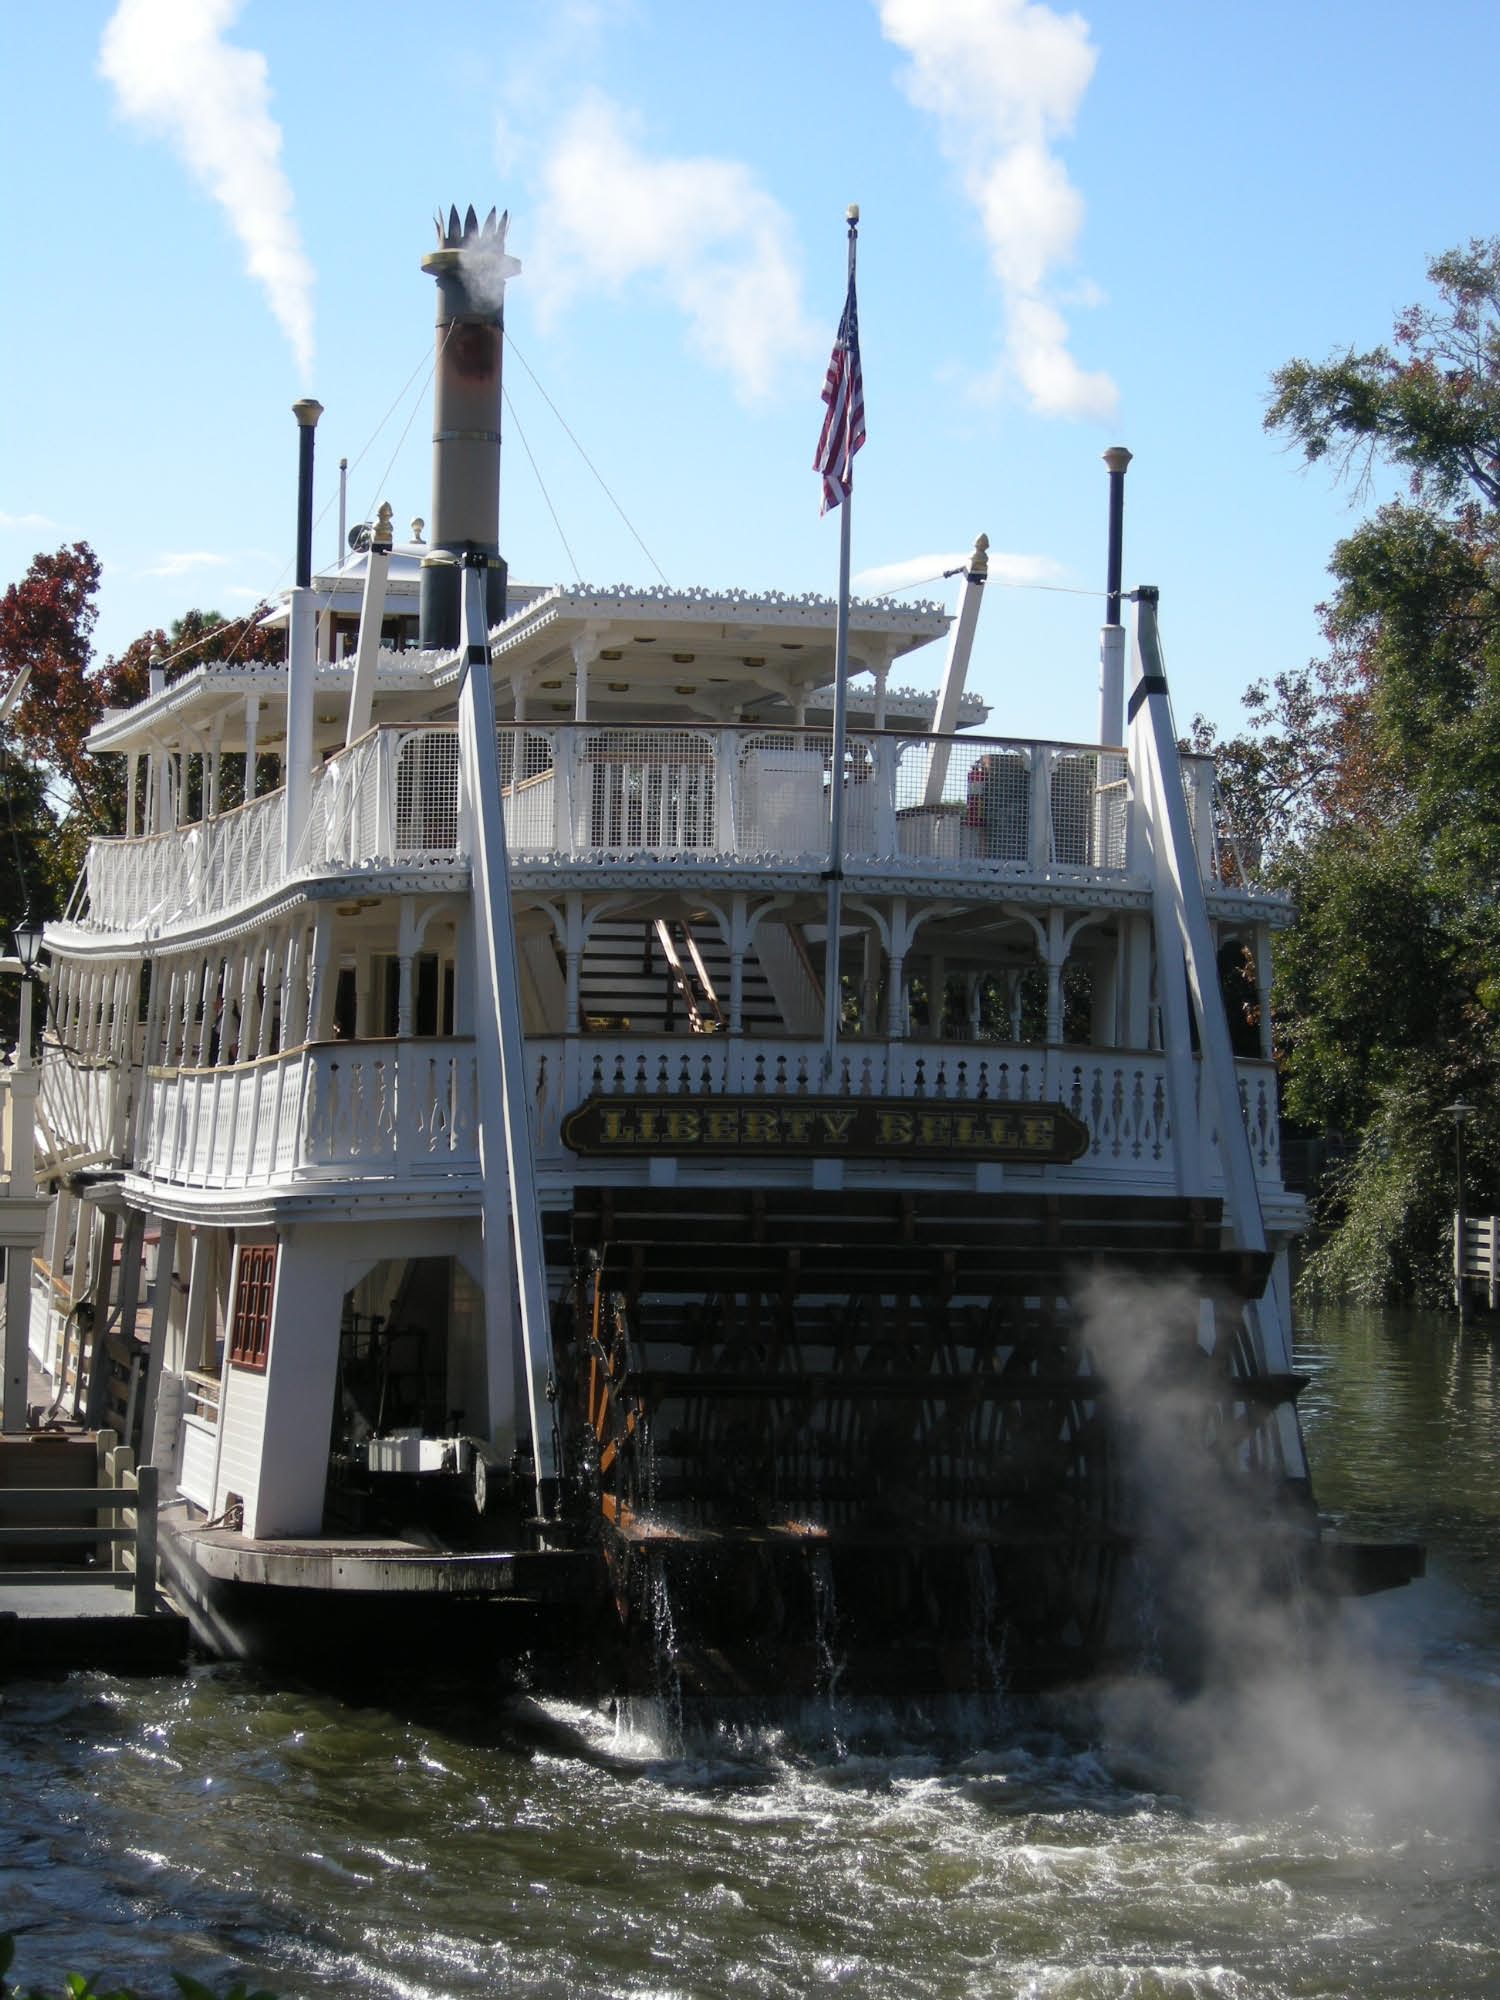 Magic Kingdom - Liberty Square - Liberty Belle Riverboat